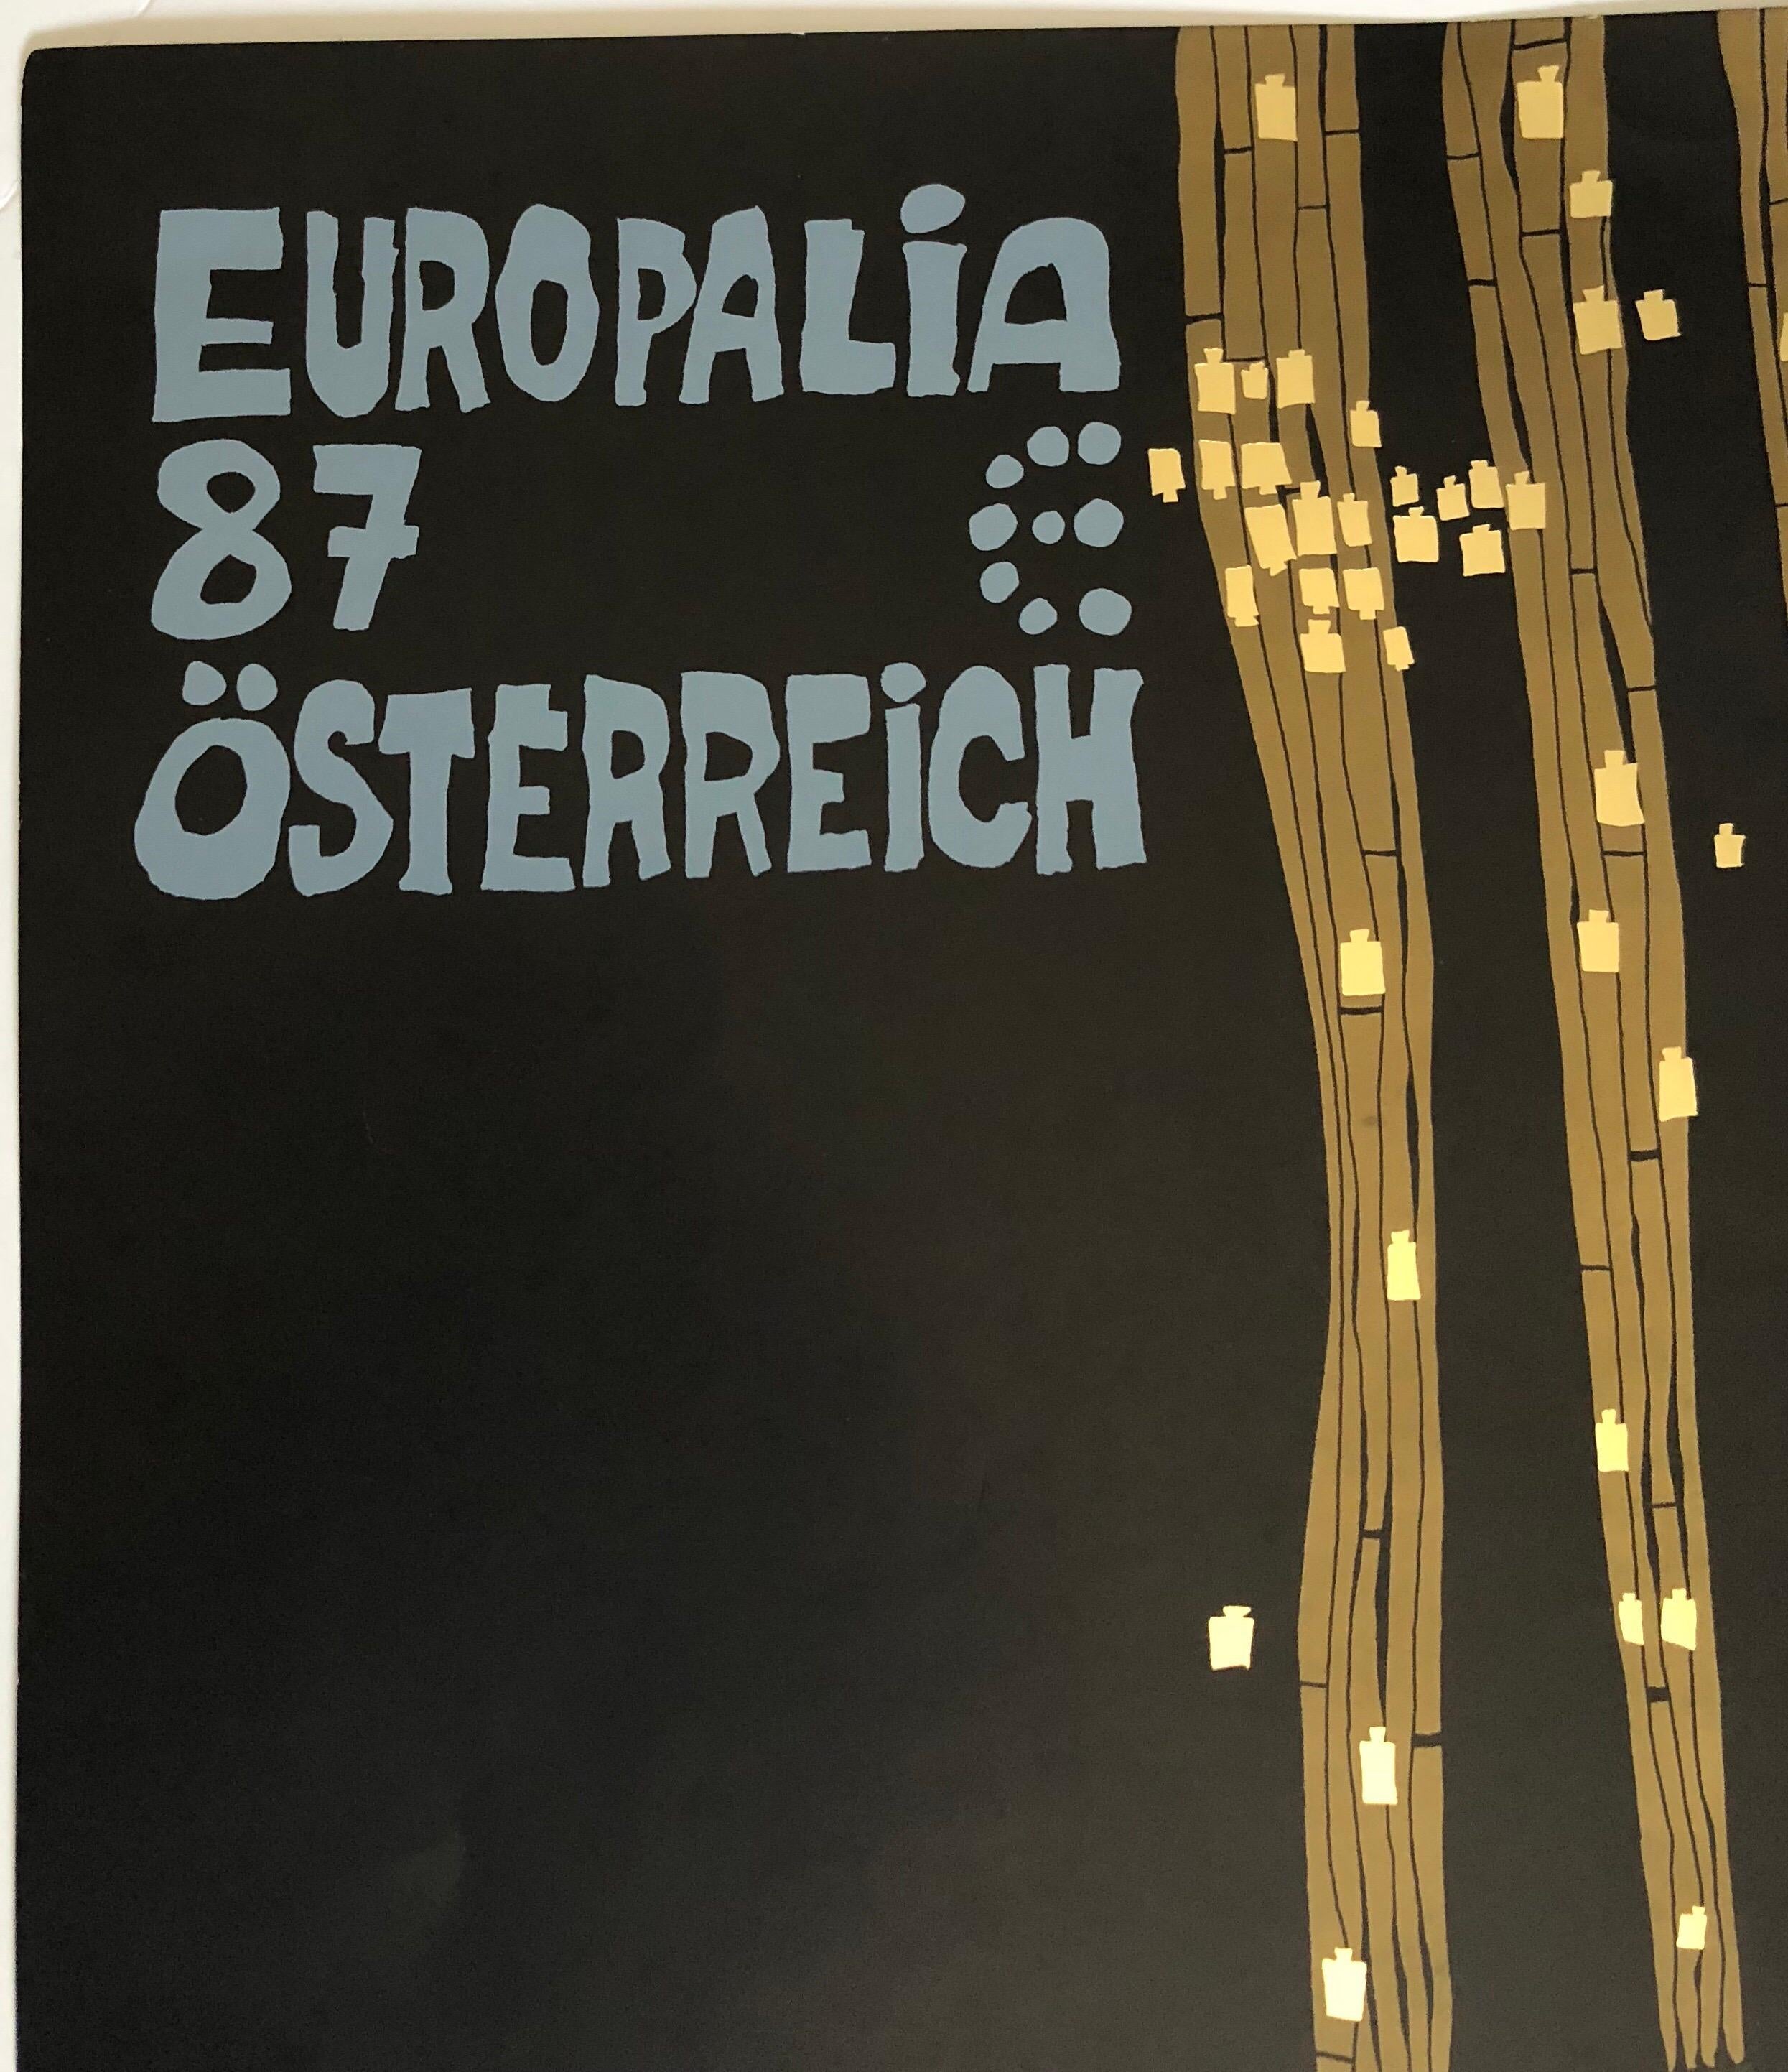 Affiche de lithographie offset Europalia 87 Osterreich en métal imprimé feuille - Print de Friedensreich Hundertwasser